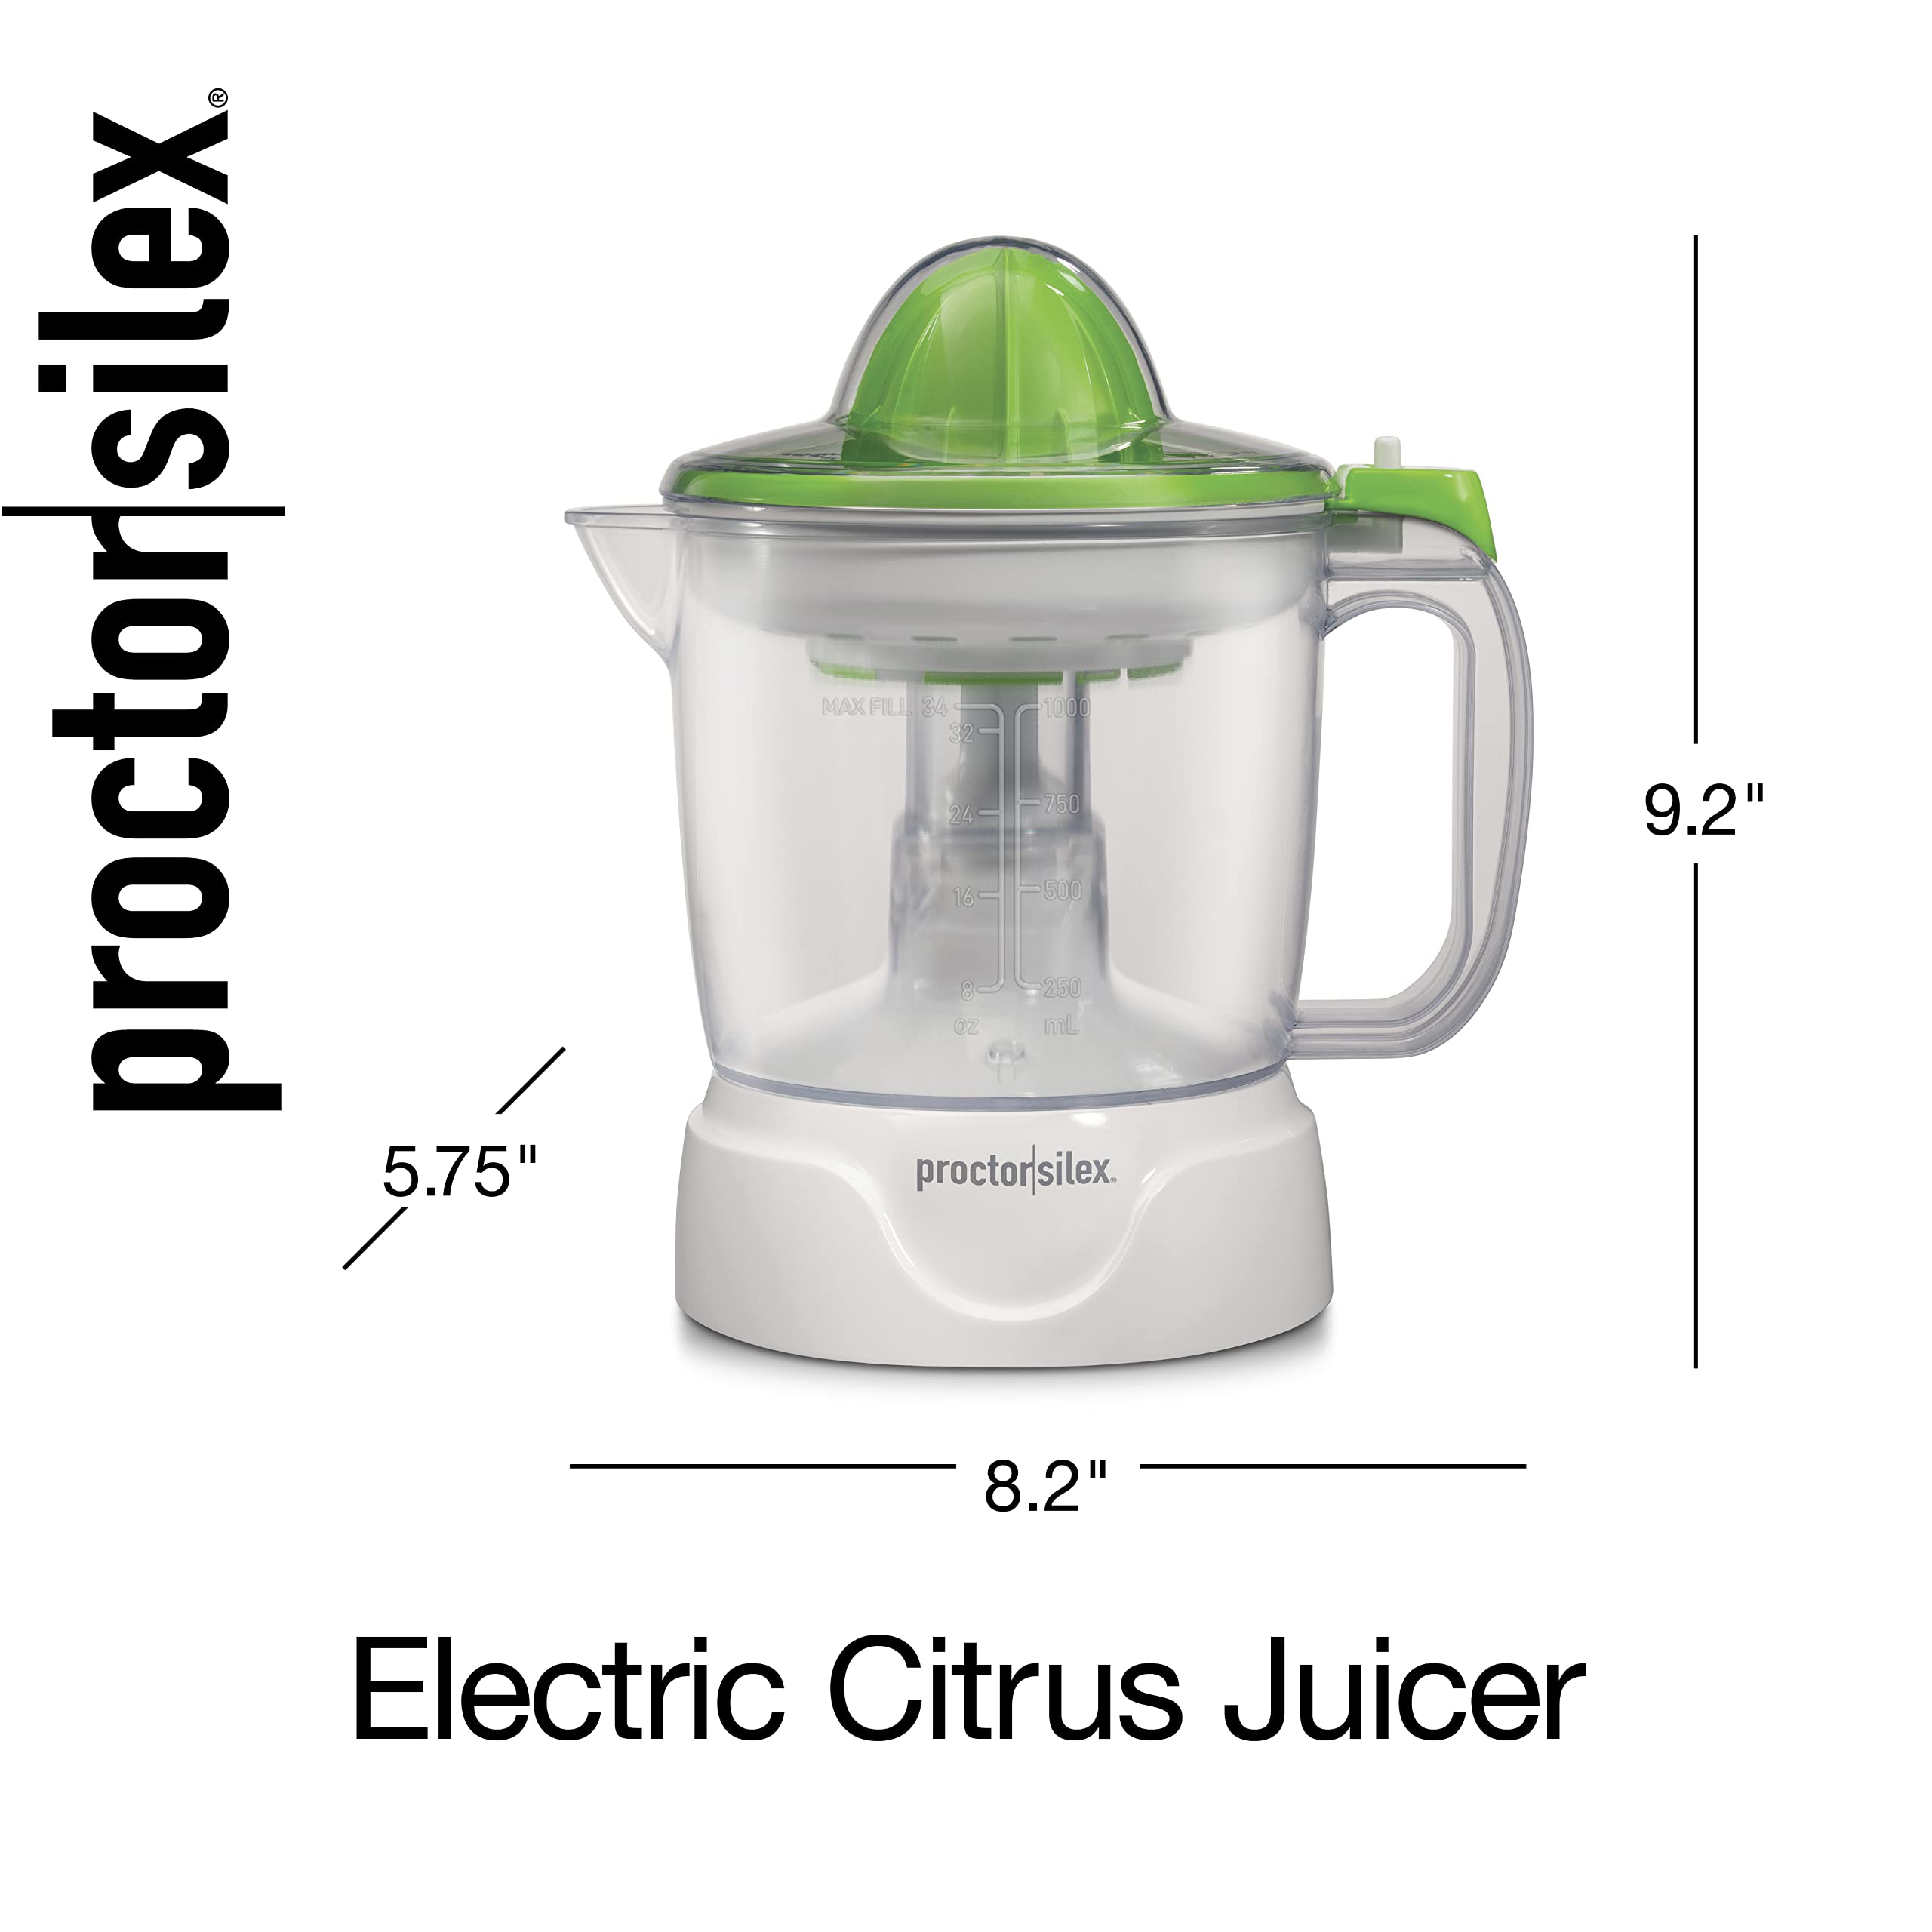 Proctor Silex Electric Citrus Juicer Machine, 34 oz., for Orange, Lemon, Grapefruit Juice, White & Green (66337)